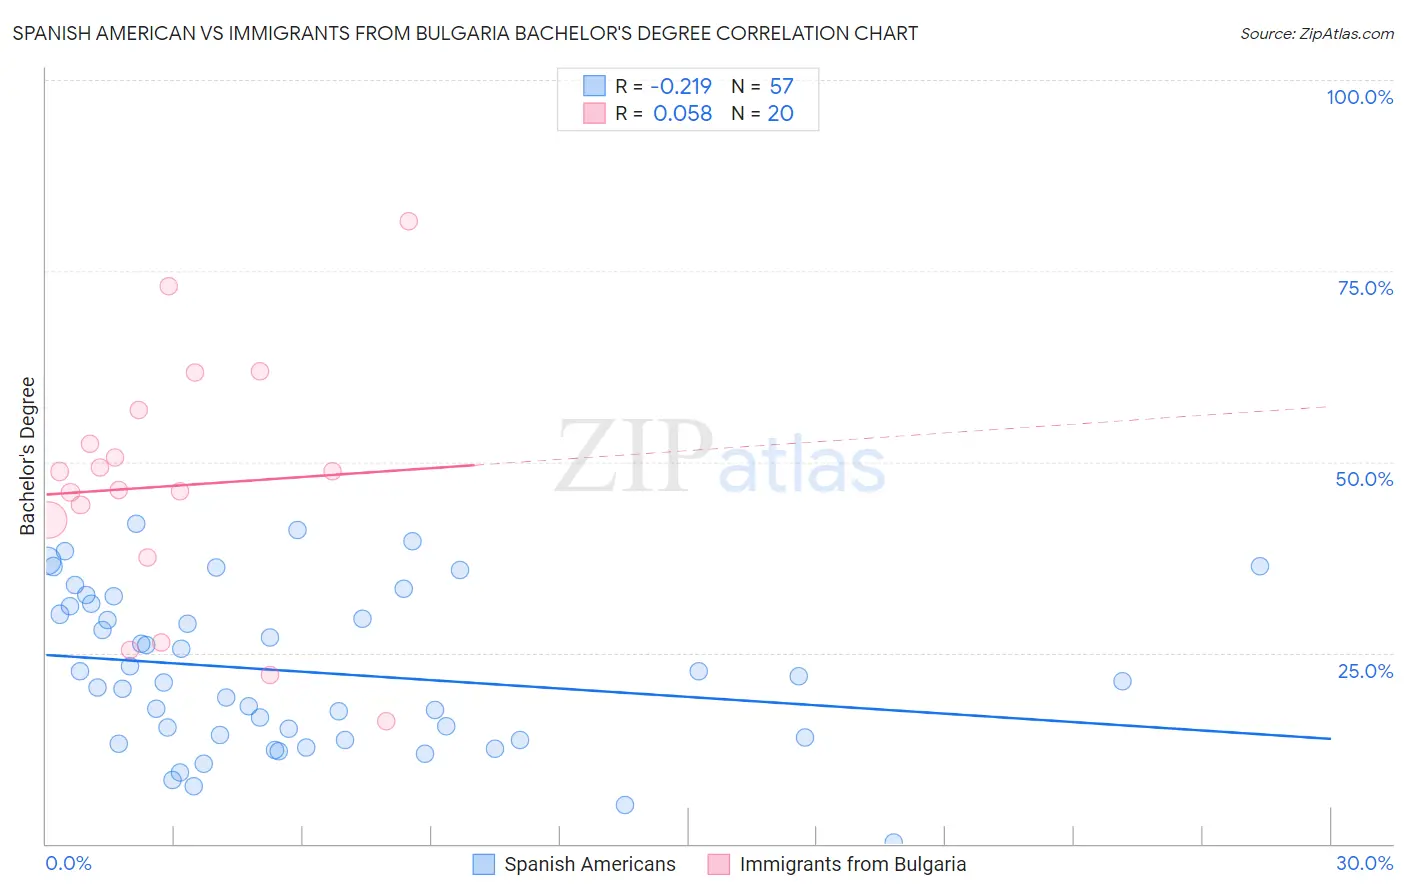 Spanish American vs Immigrants from Bulgaria Bachelor's Degree